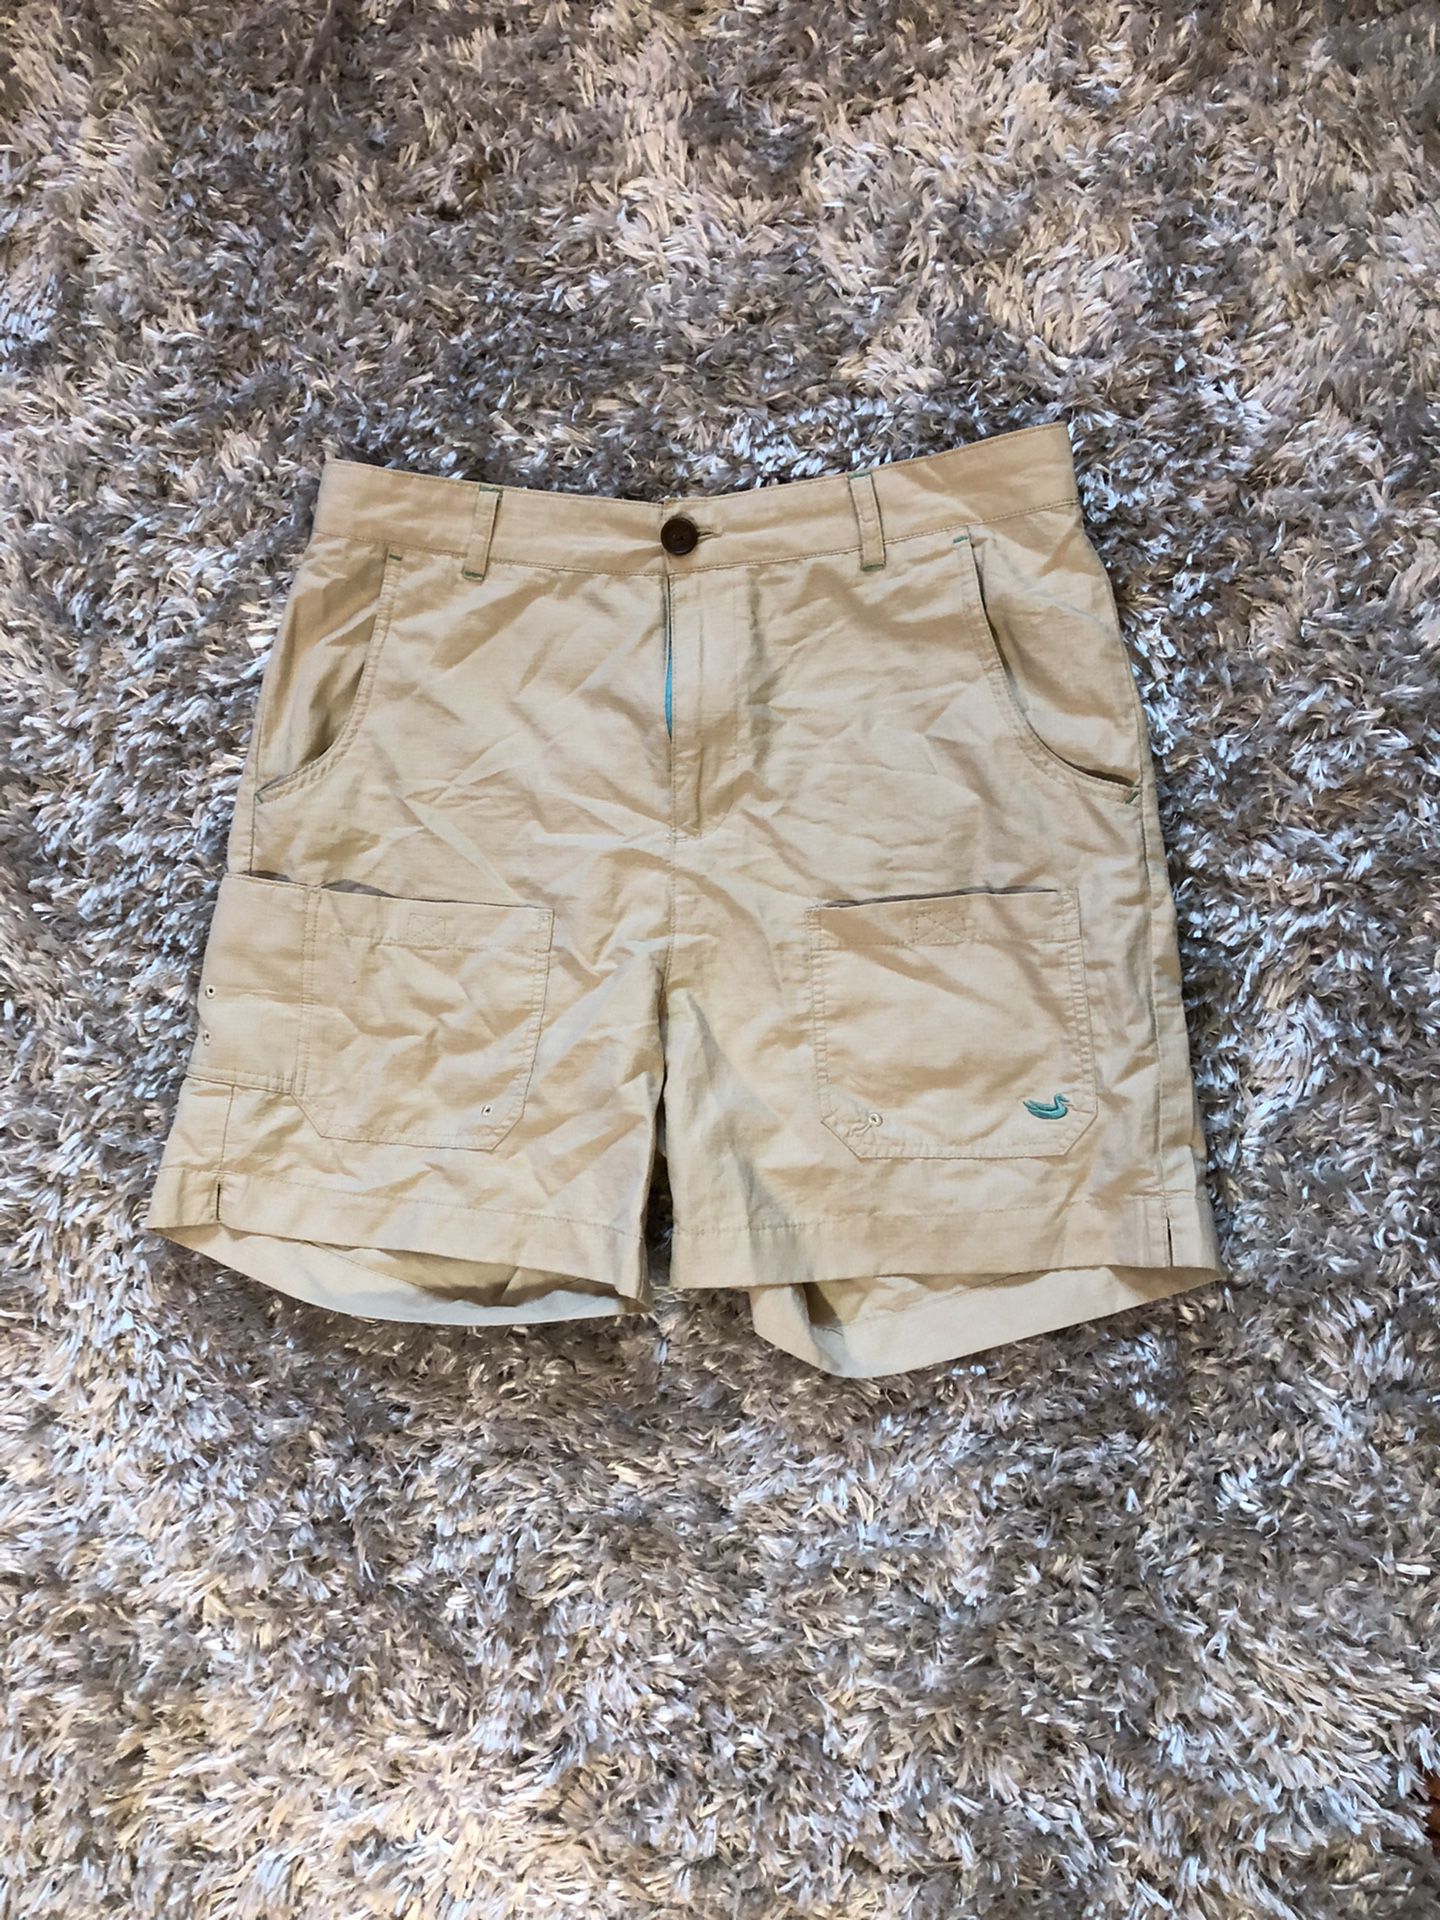 Southern Fishing Shorts - Shorter Shorts For Fishing 🎣 